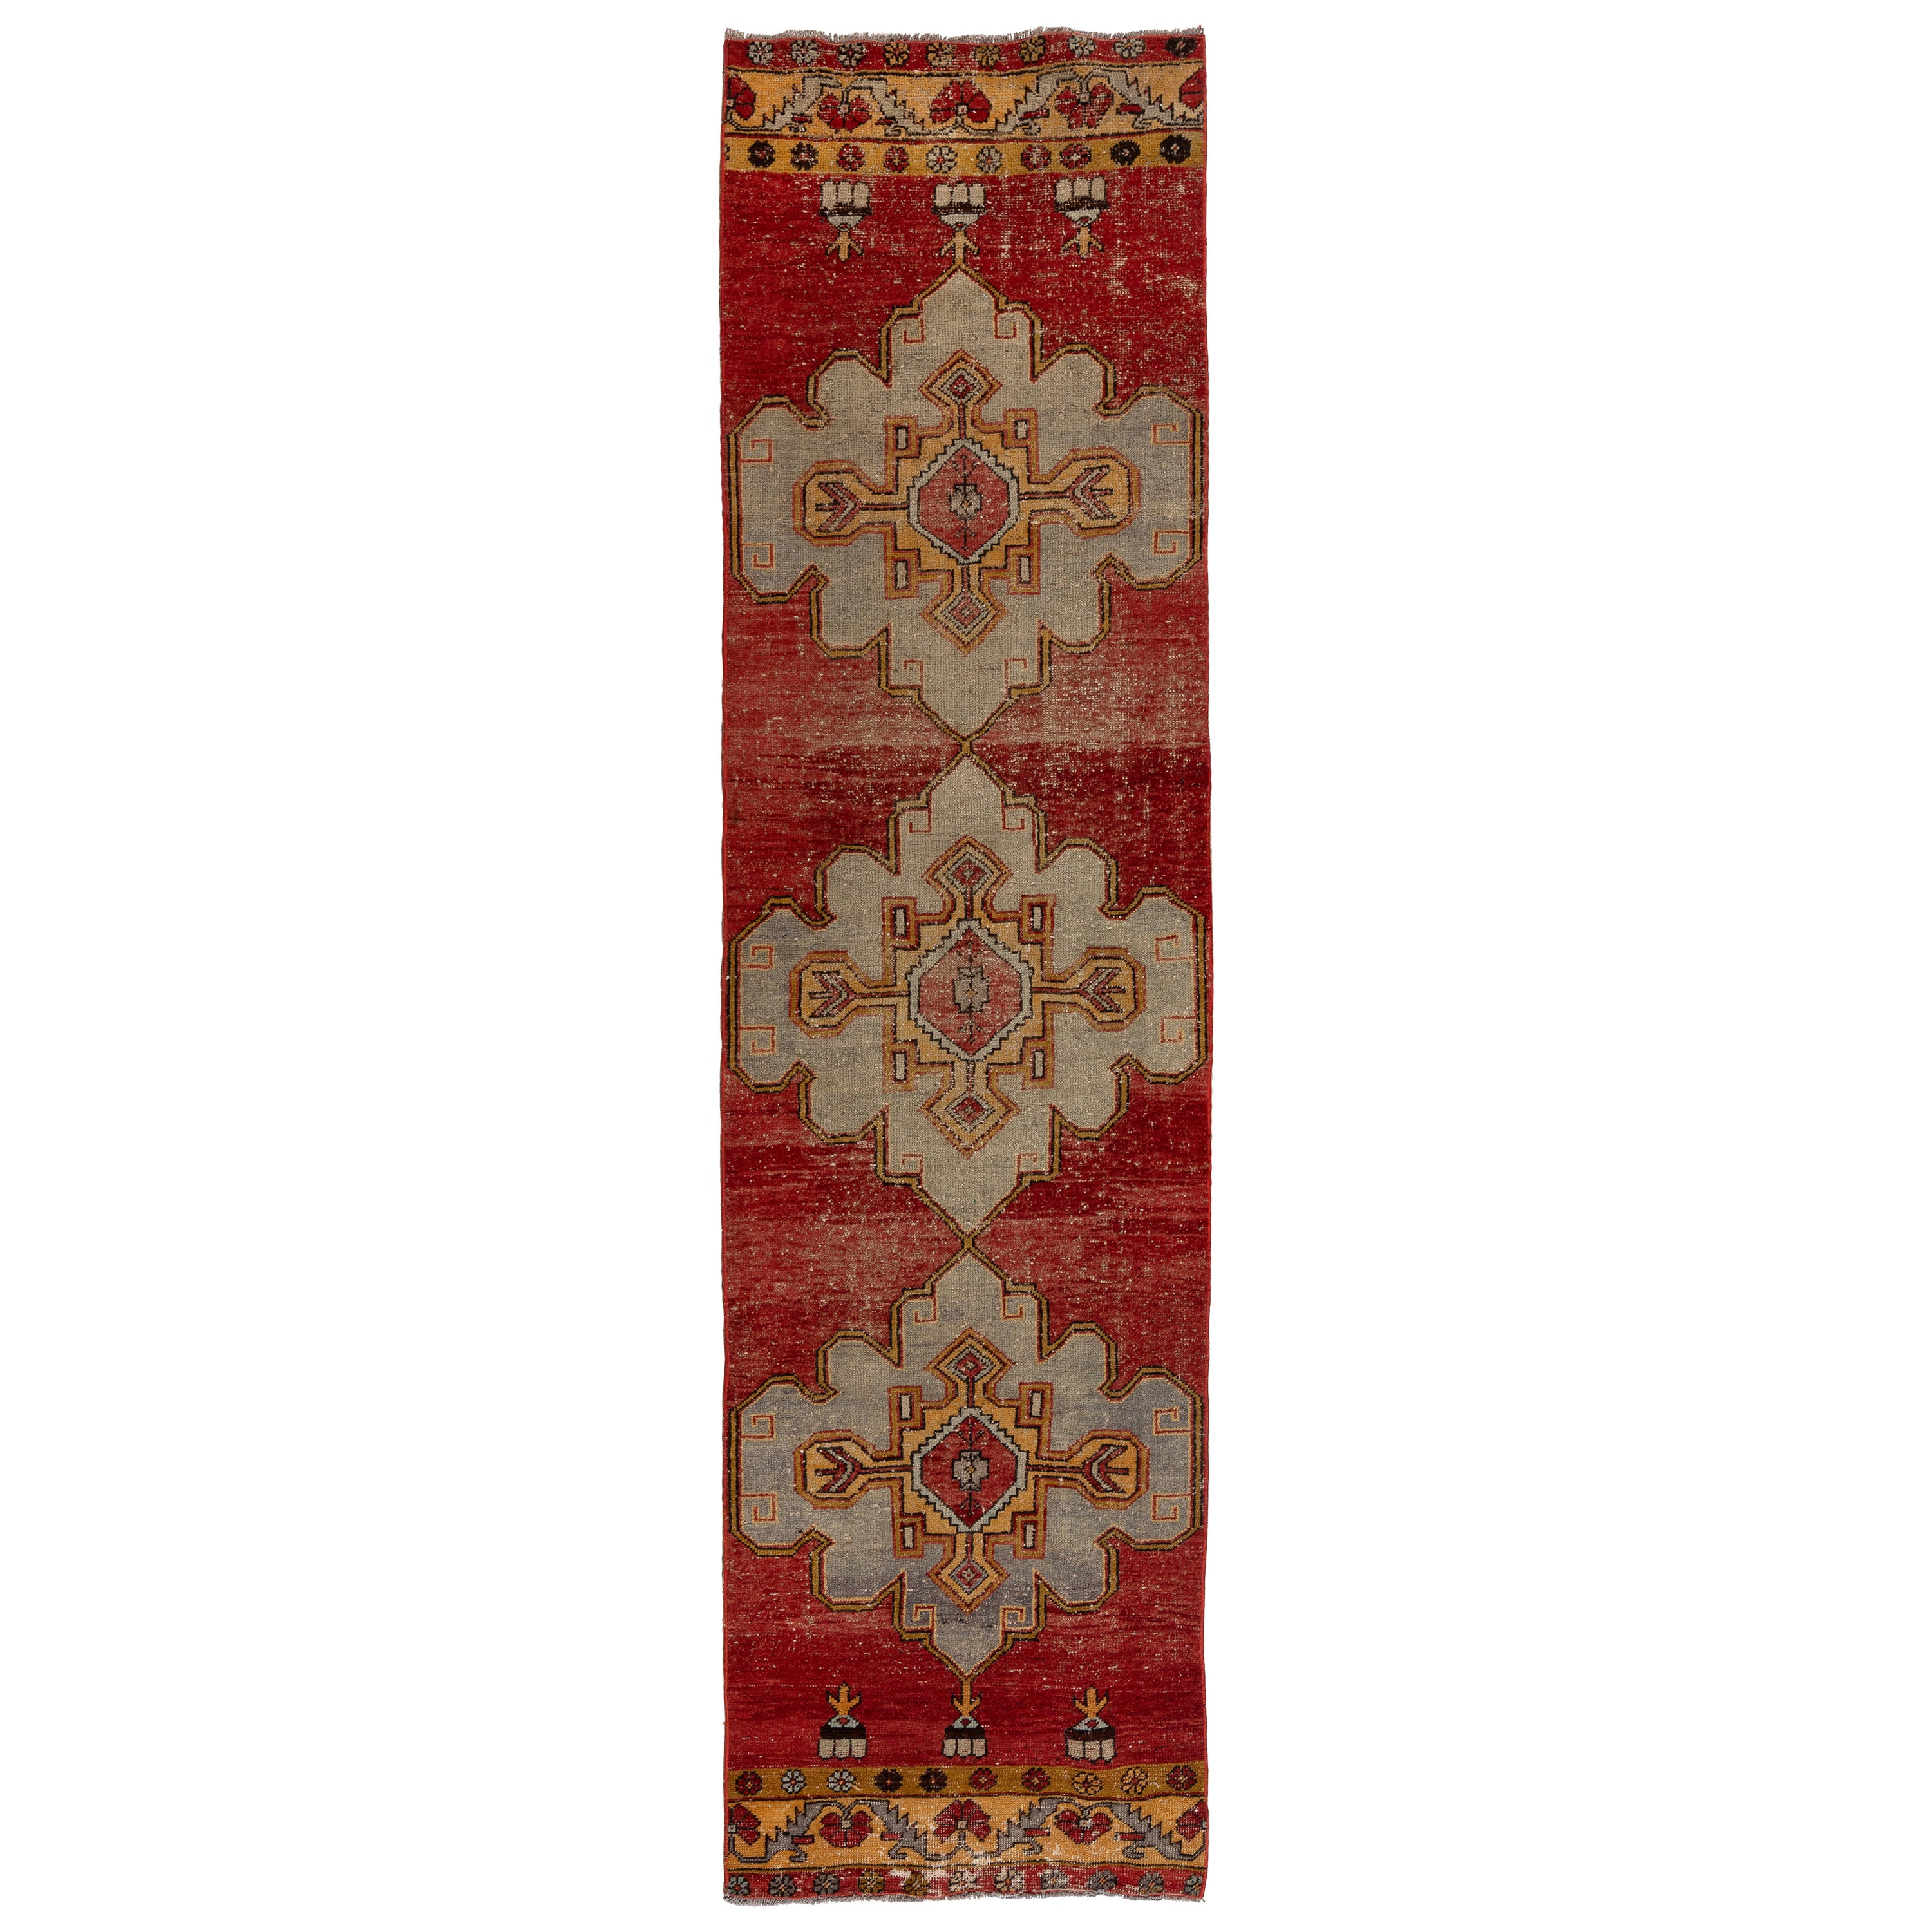 3x11.4 Ft Vintage Turkish Runner Rug, Unique Handmade Wool Hallway Carpet